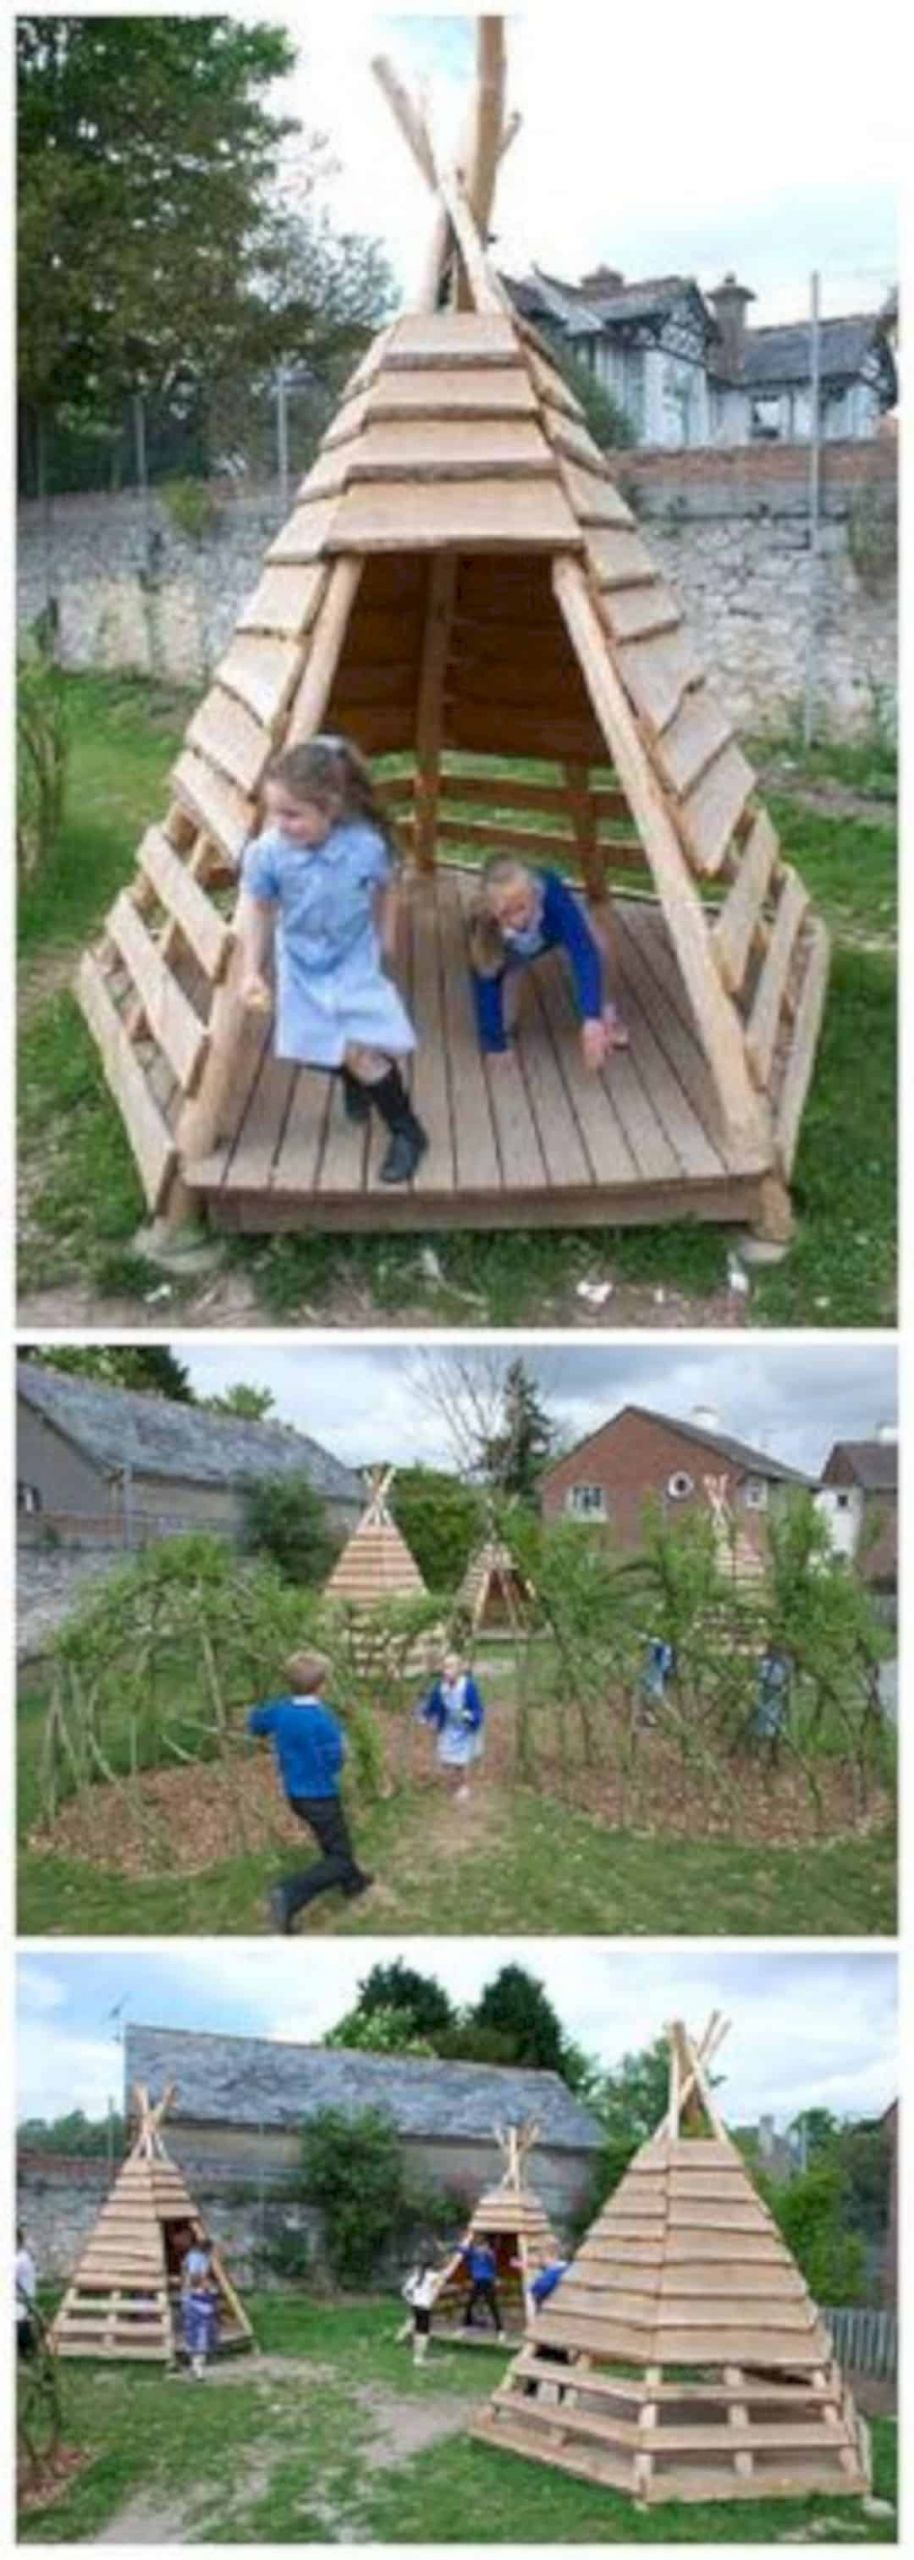 DIY Backyard Ideas For Kids
 Some Nice DIY Kids Playground Ideas for Your Backyard